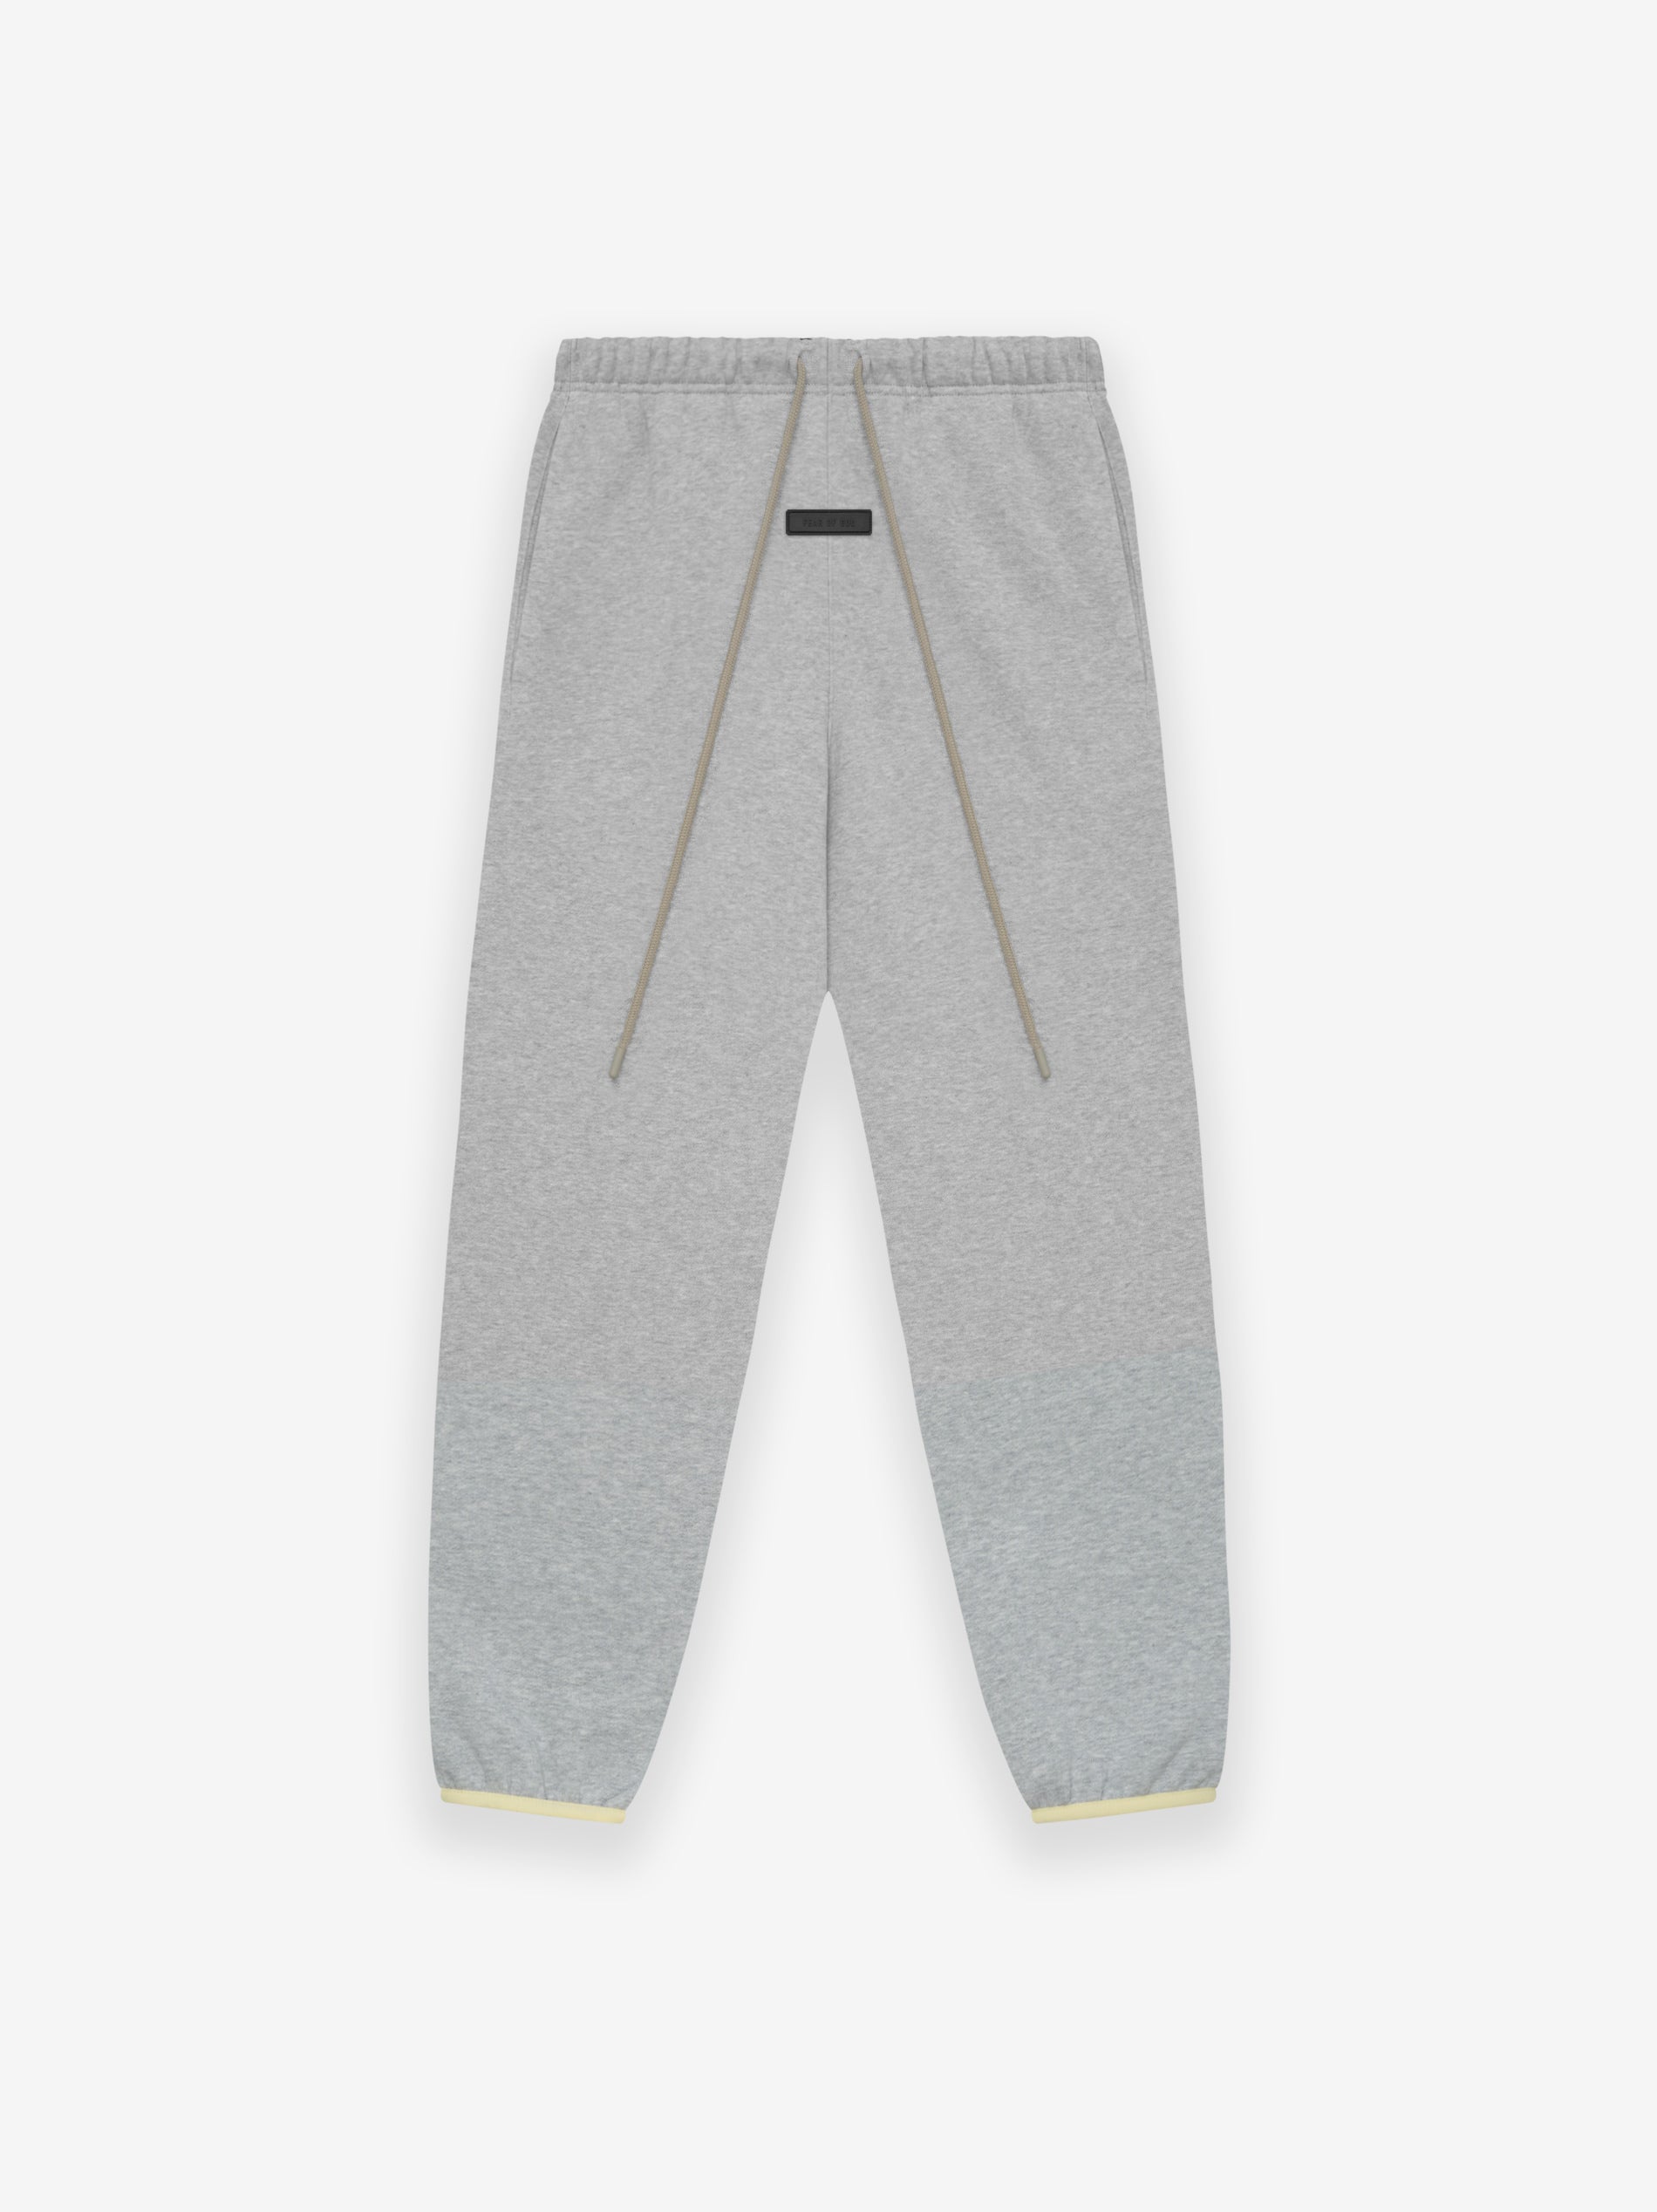 Fear of God ESSENTIALS: Gray Drawstring Sweatpants